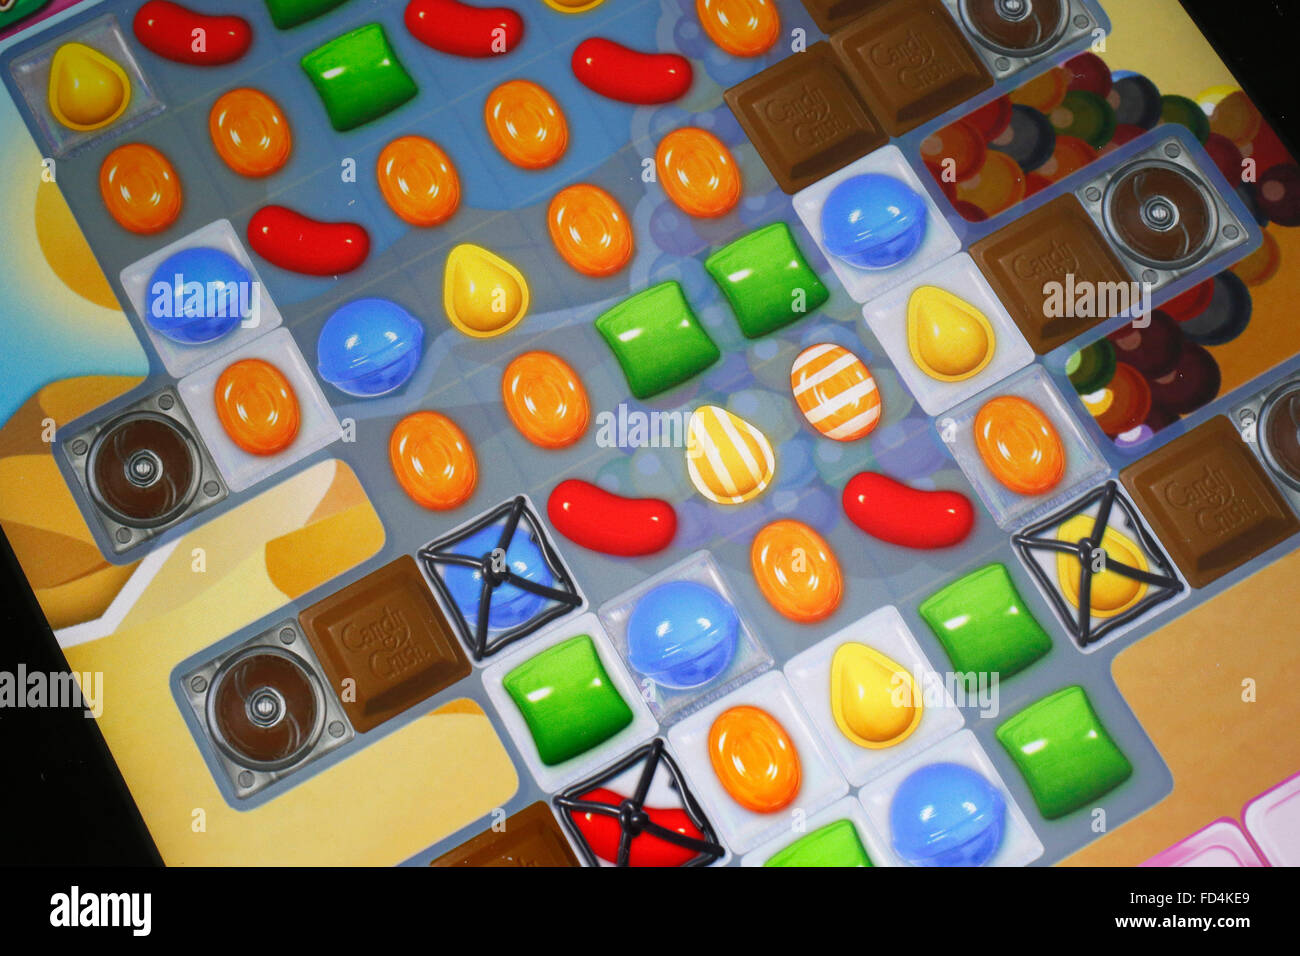 Ipad game. Candy Crush. Stock Photo